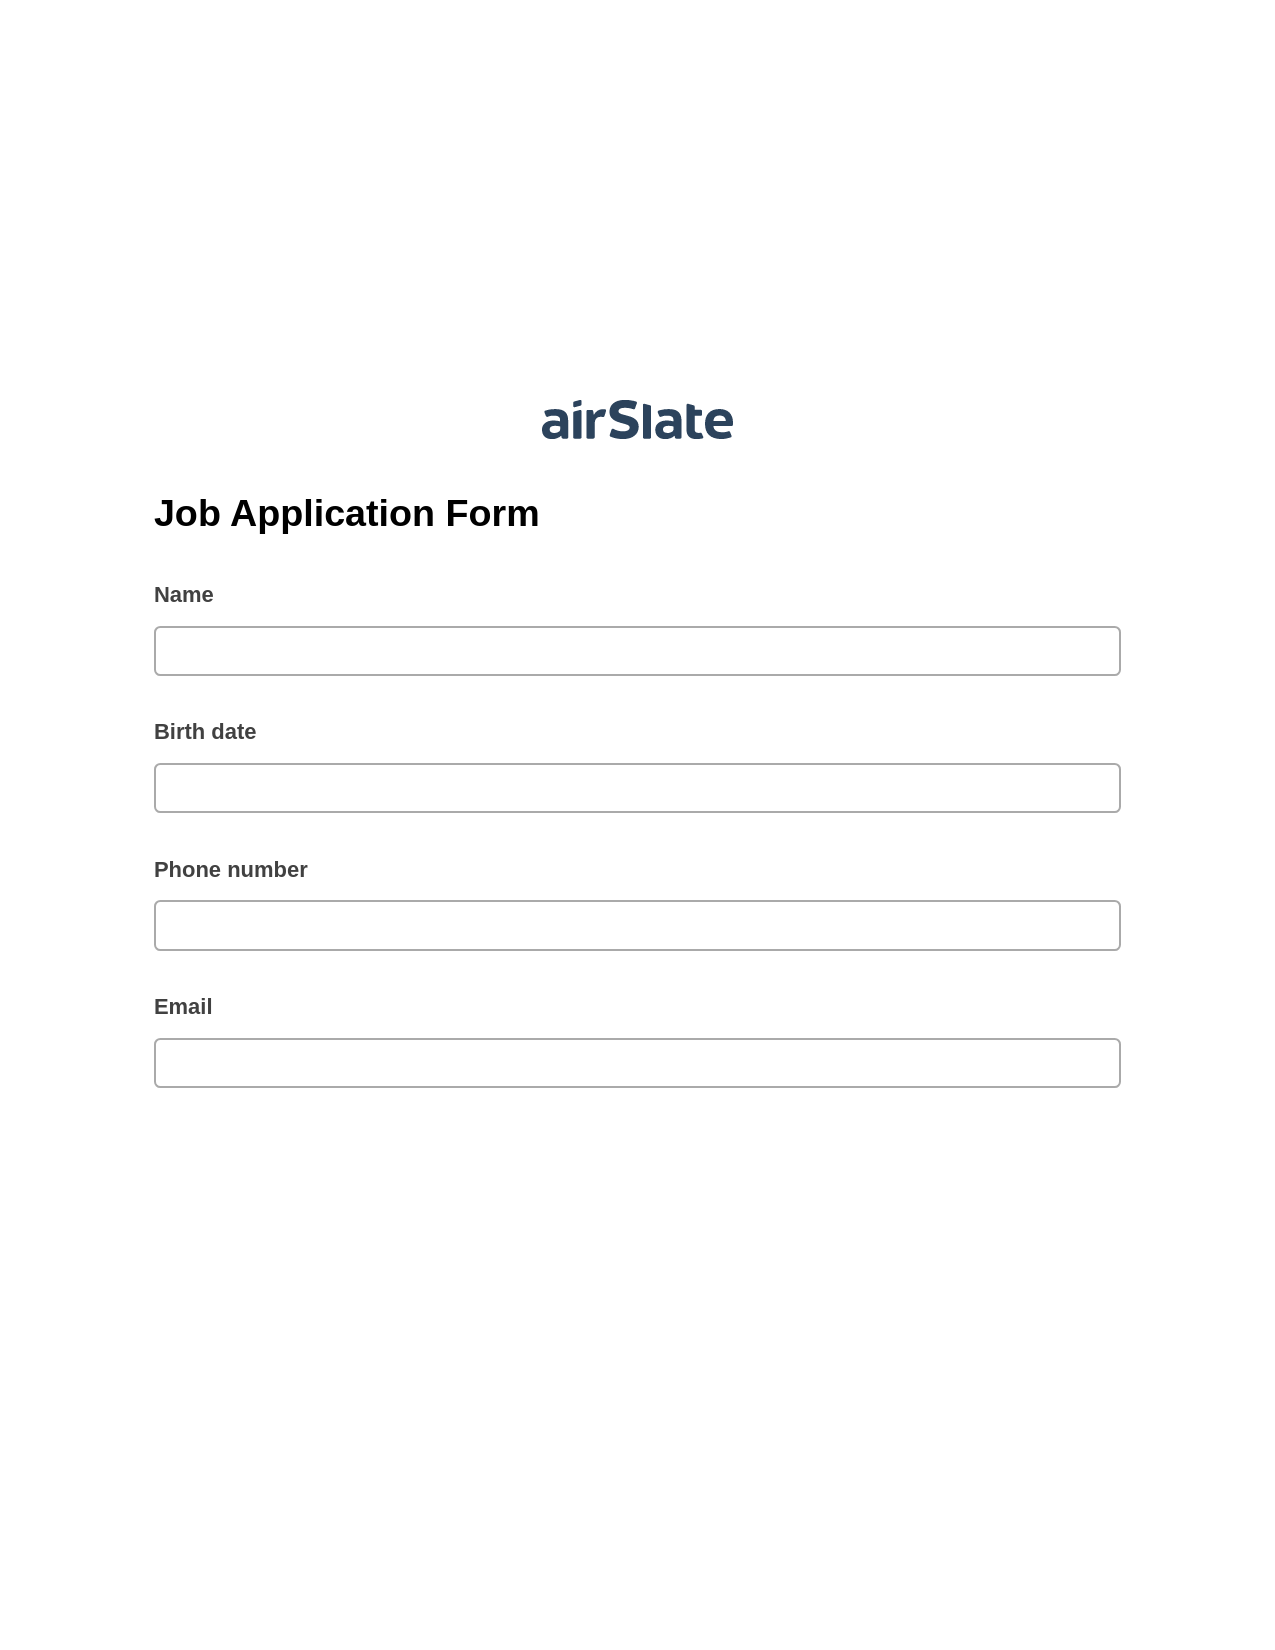 Job Application Form Pre-fill from Salesforce Record Bot, Revoke Access Bot, Google Drive Bot